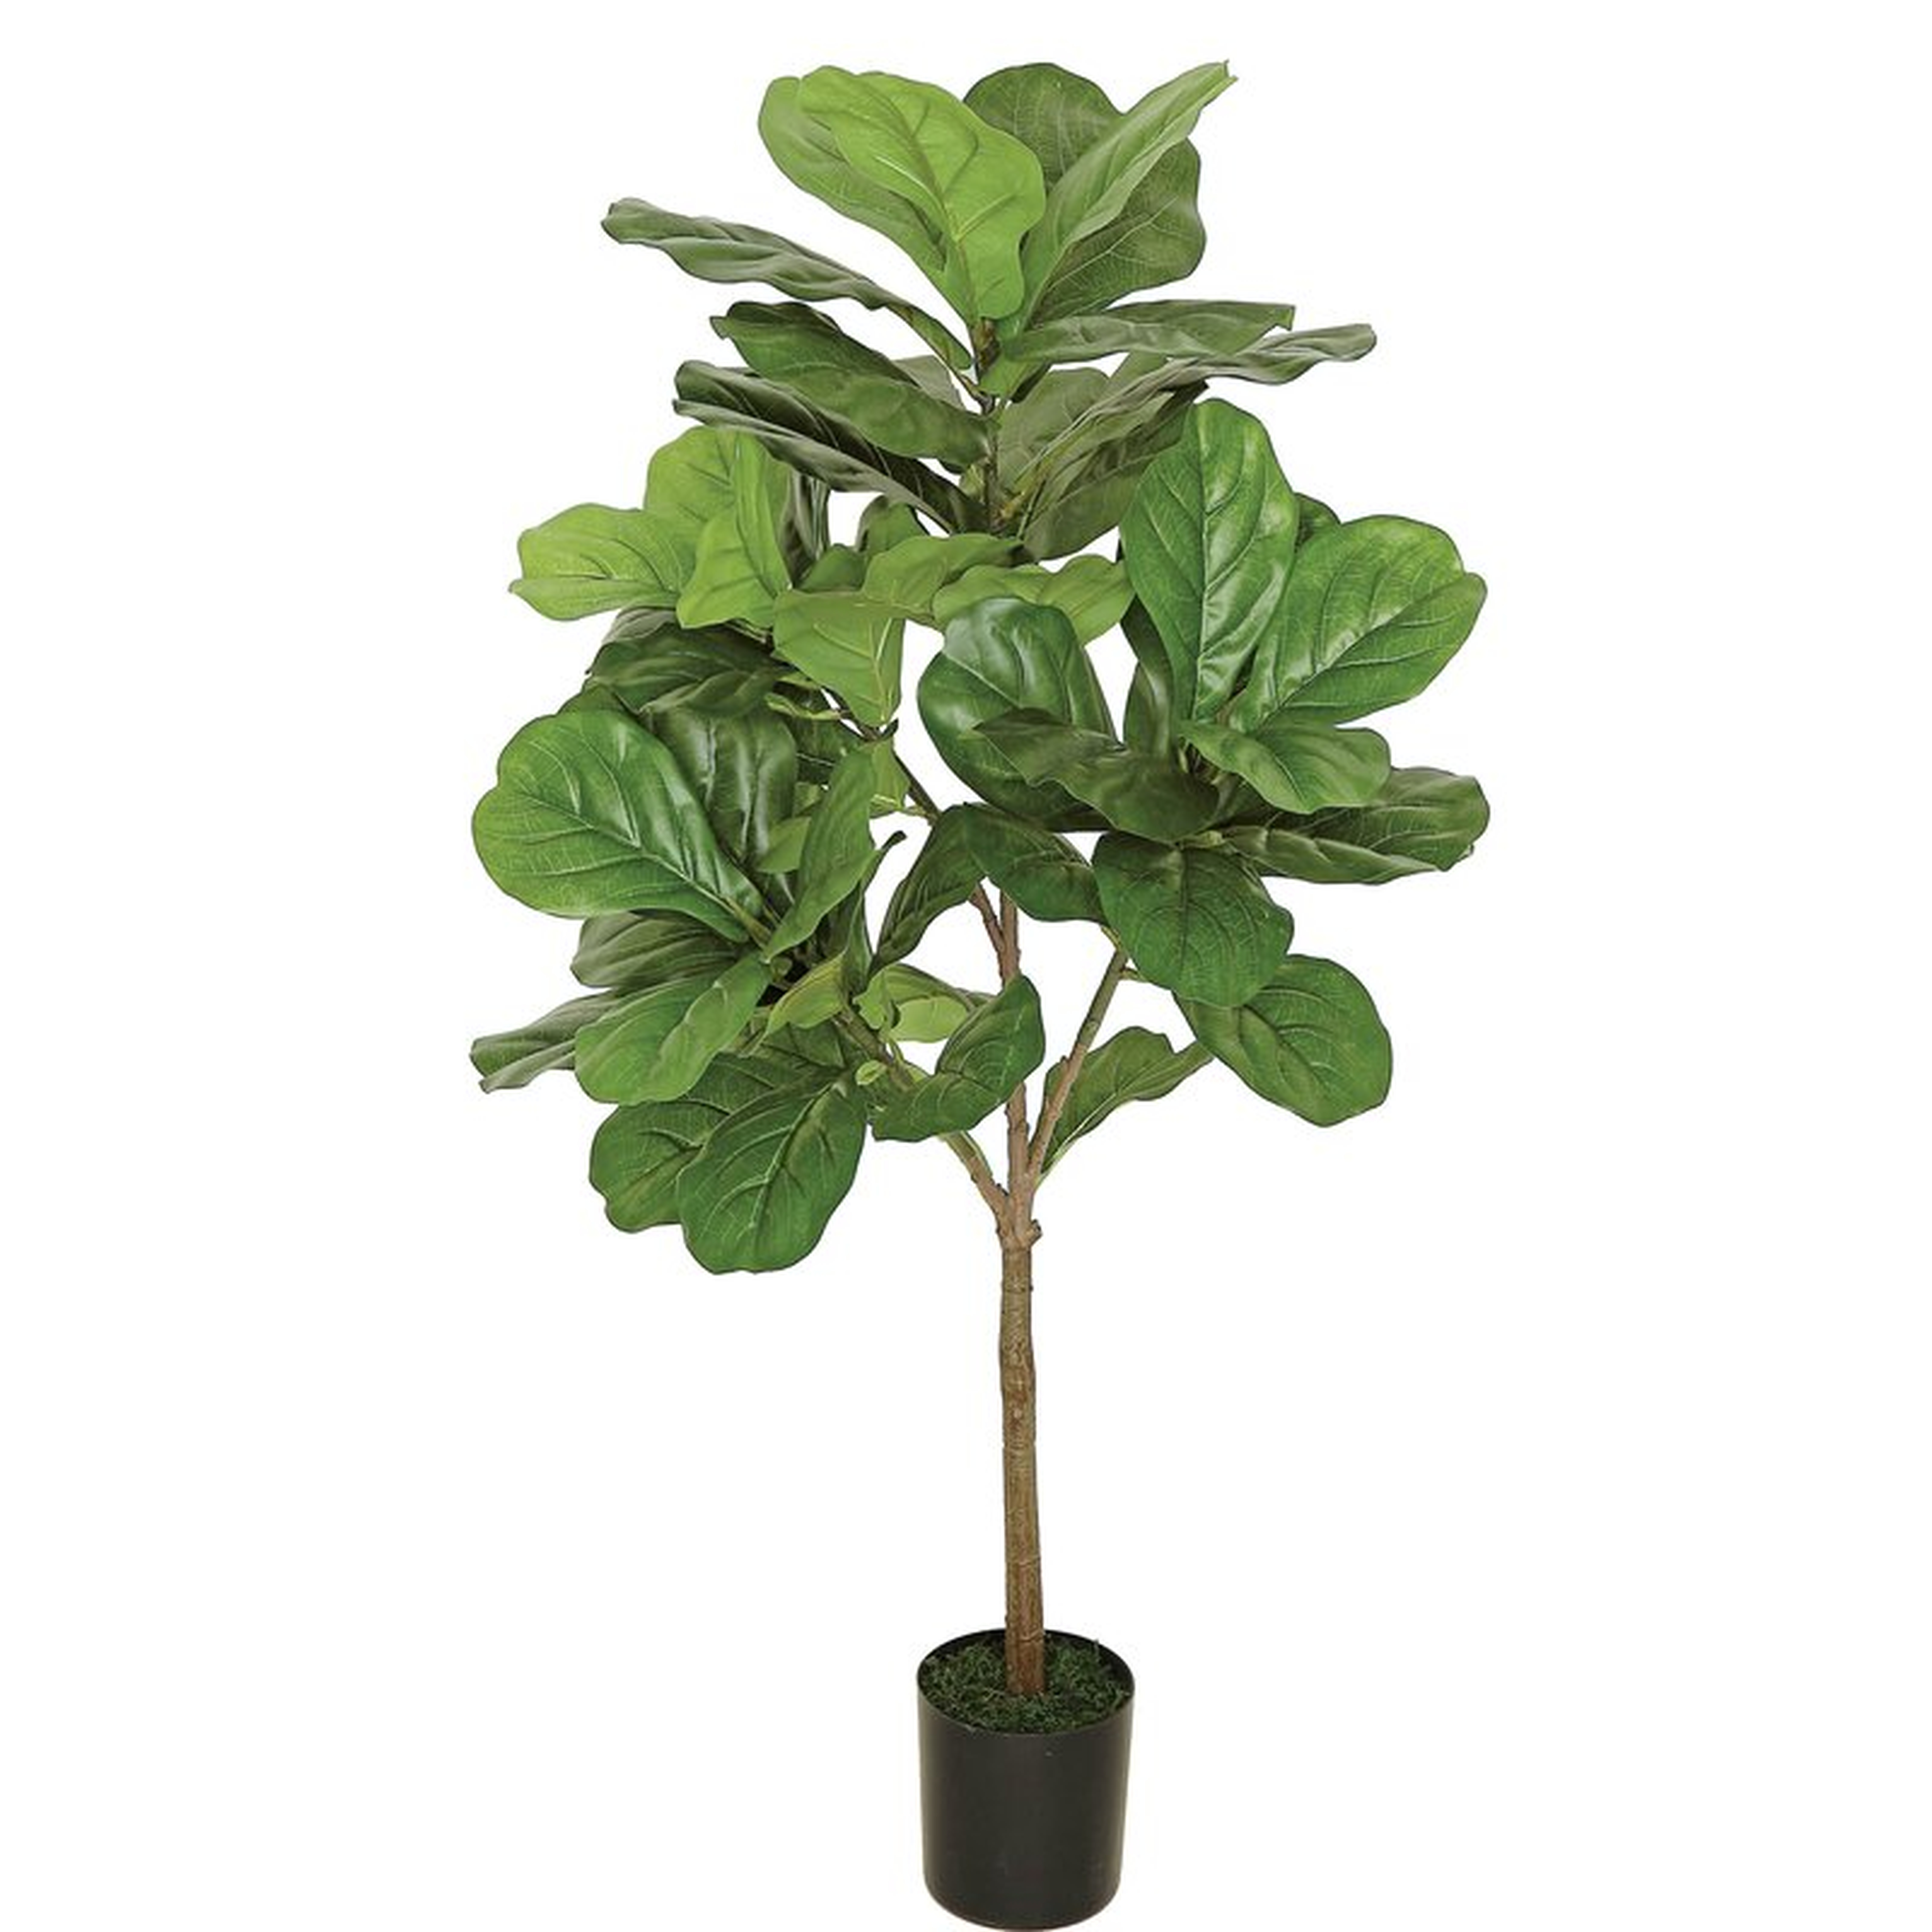 Deluxe 6' Fiddle Leaf Fig Tree in Planter - Wayfair